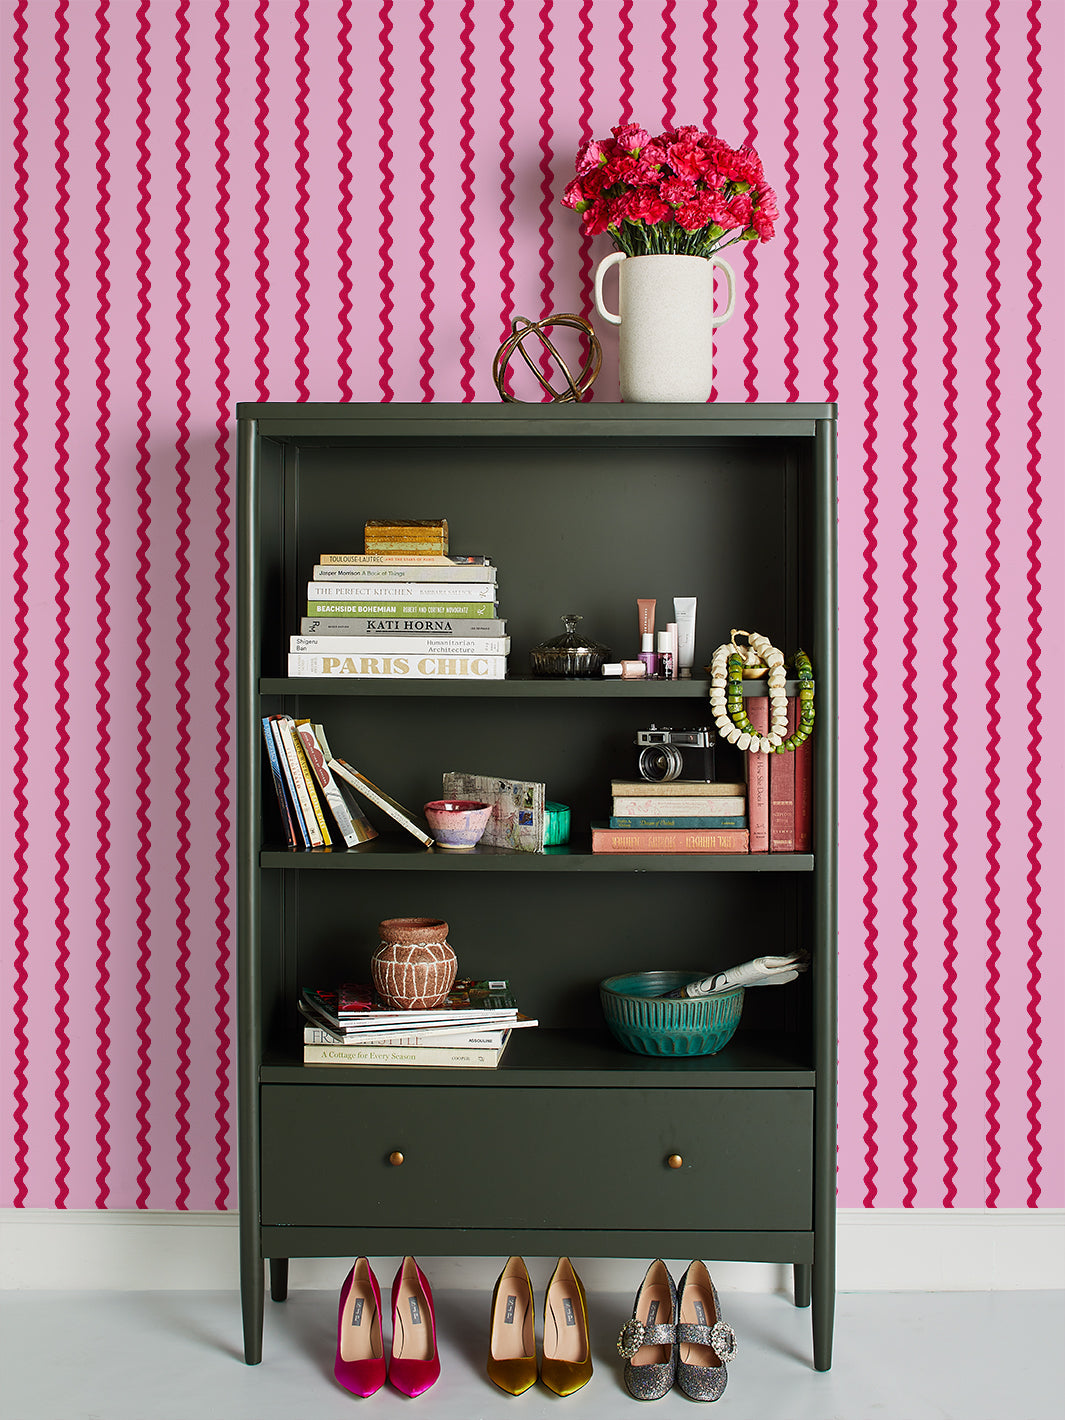 'Ric-Rac Stripe' Wallpaper by Sarah Jessica Parker - Rosé Geranium